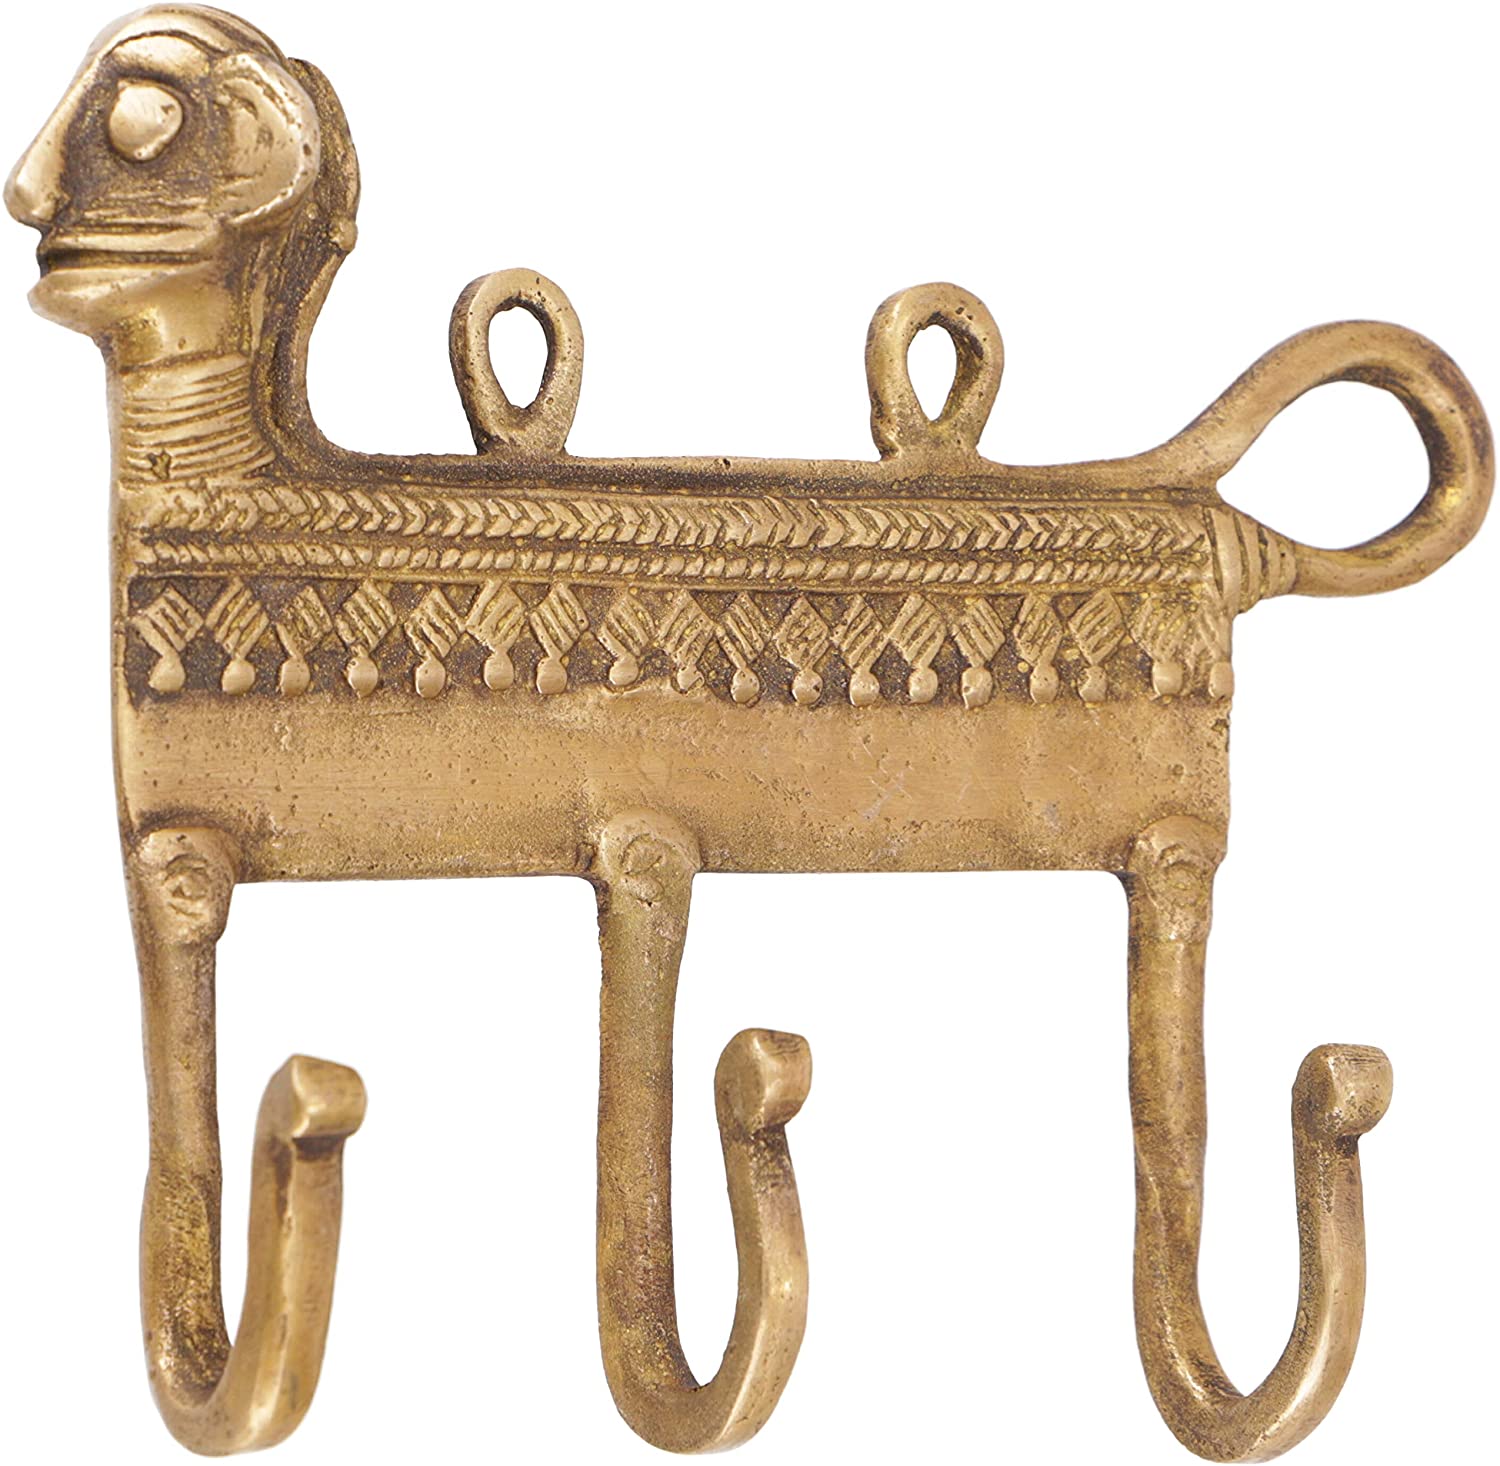 Guru-Shop Filigree Ornate Brass Wall Hook With Engraving Dog / Brass 11 X 1